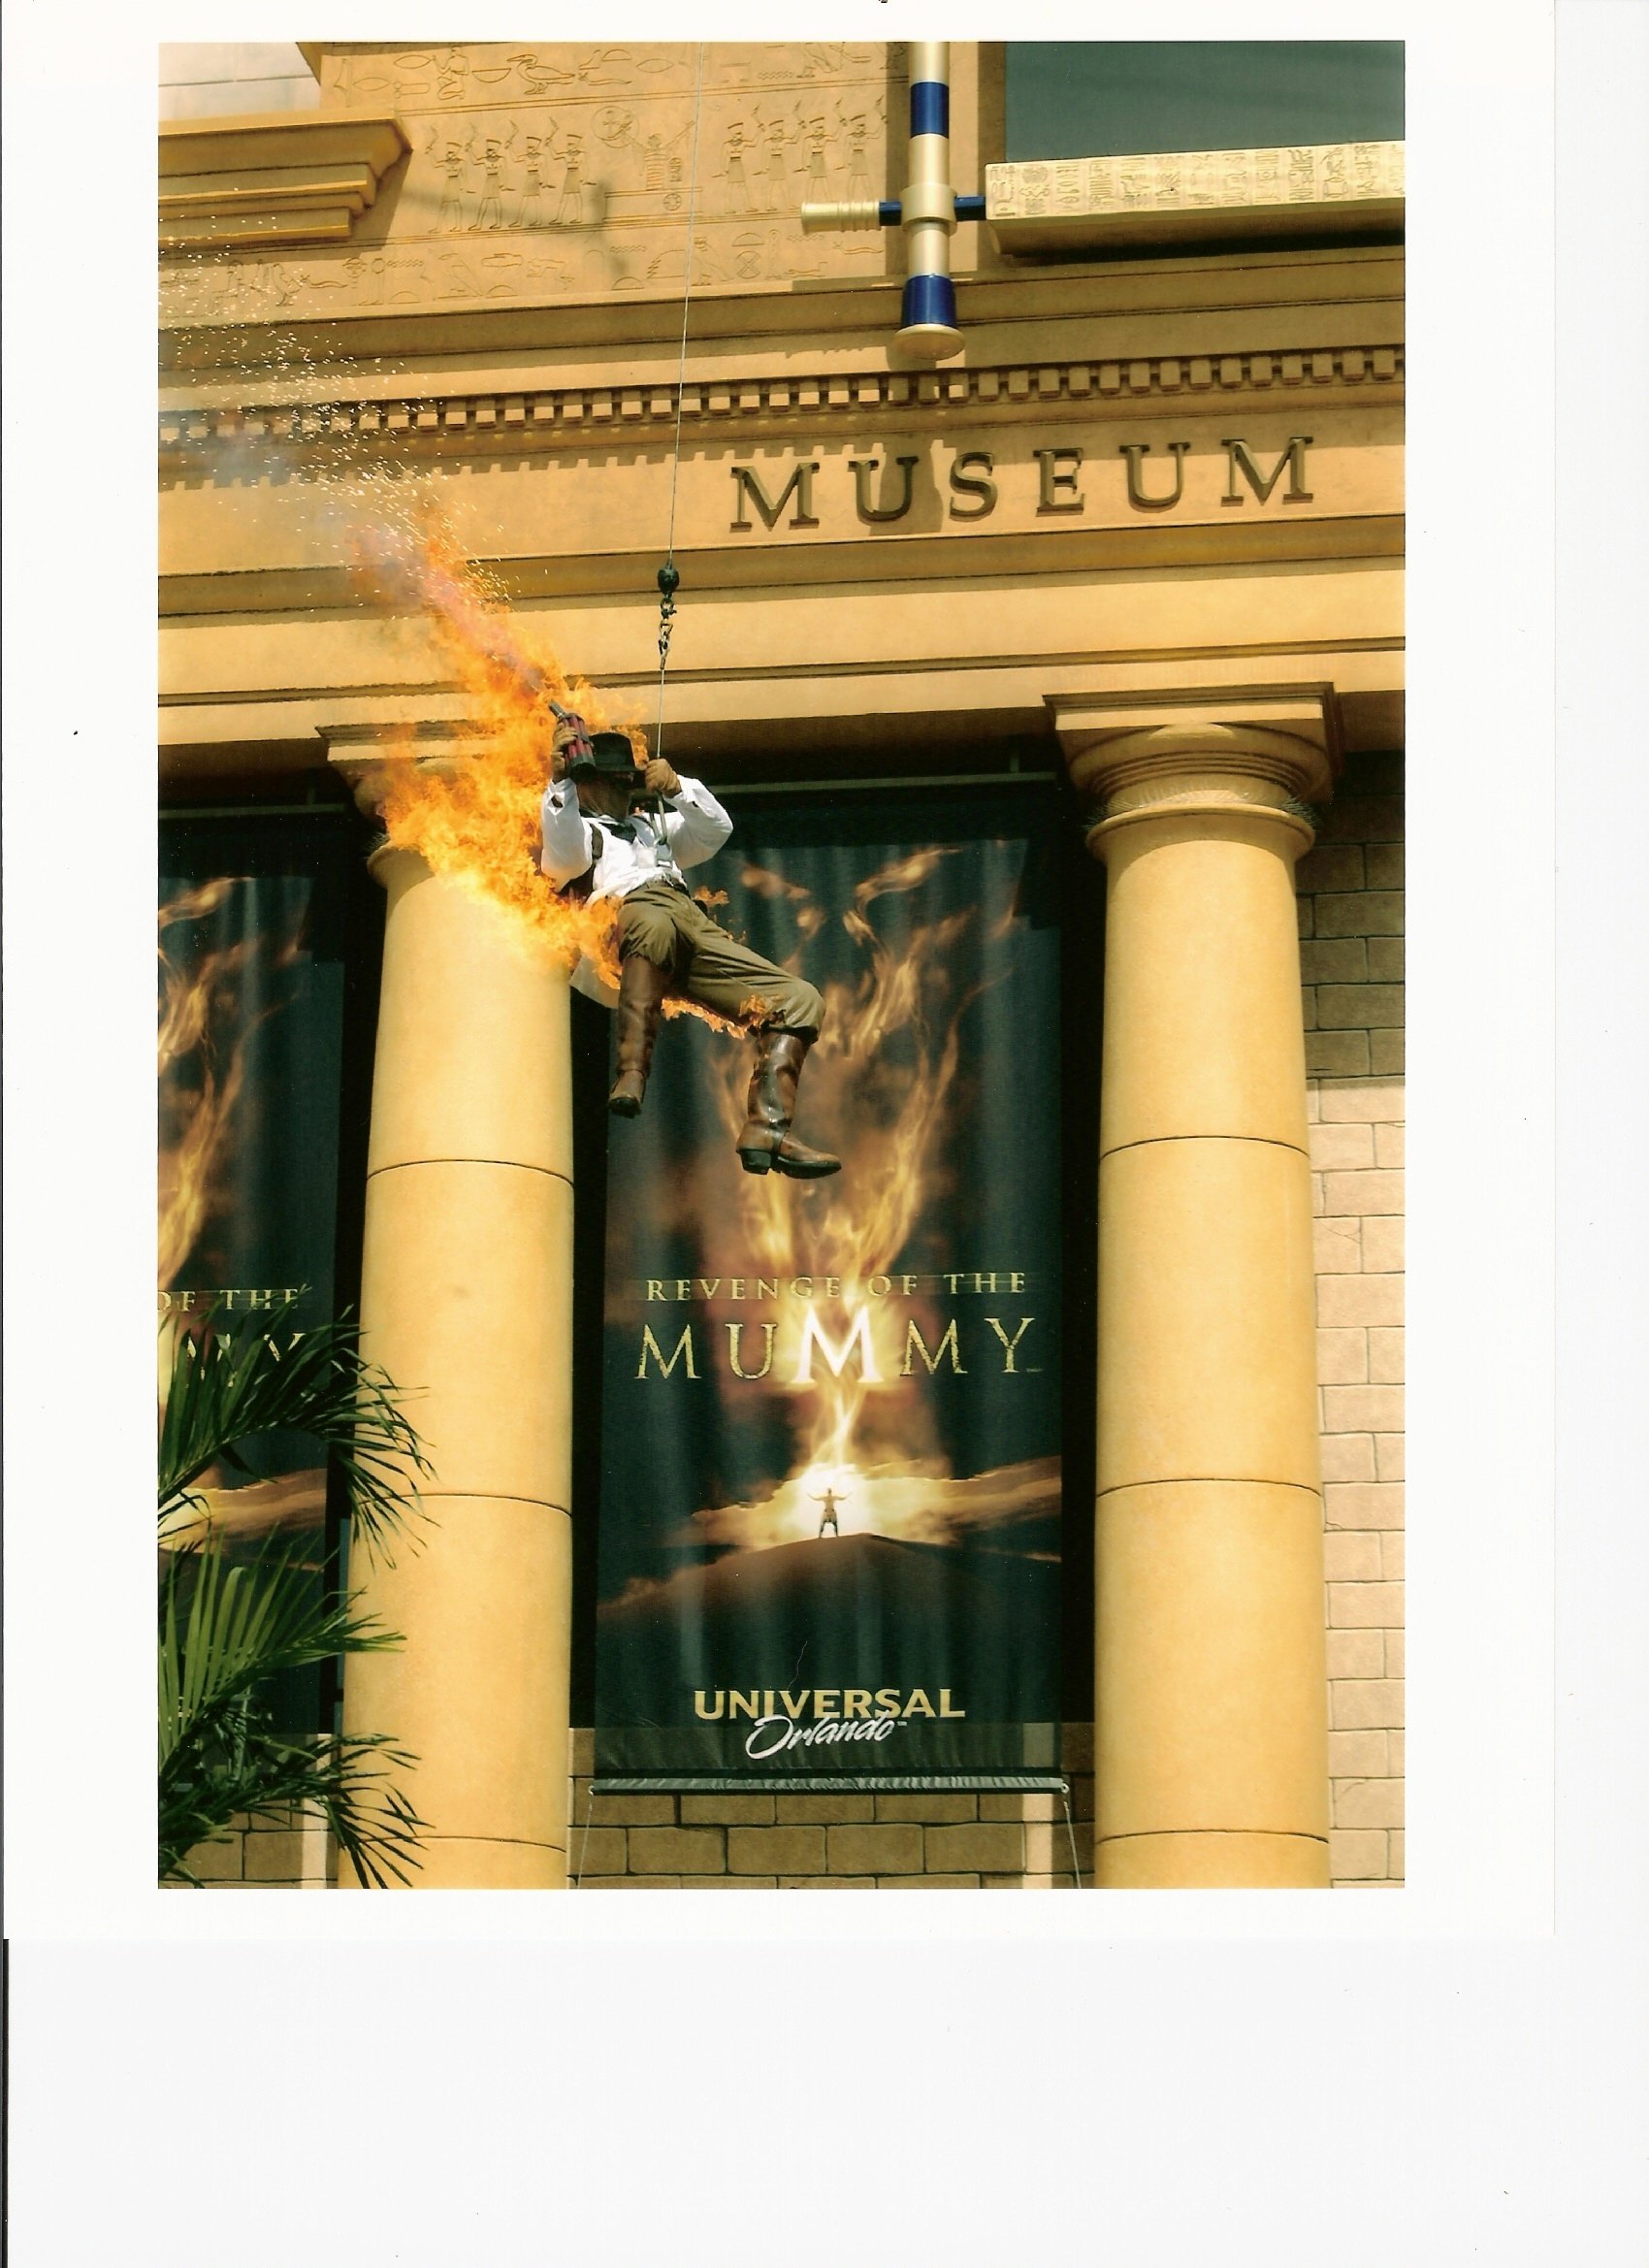 Stunt double for Brendan Fraser on Mummy Grand Opening, Universal Studios